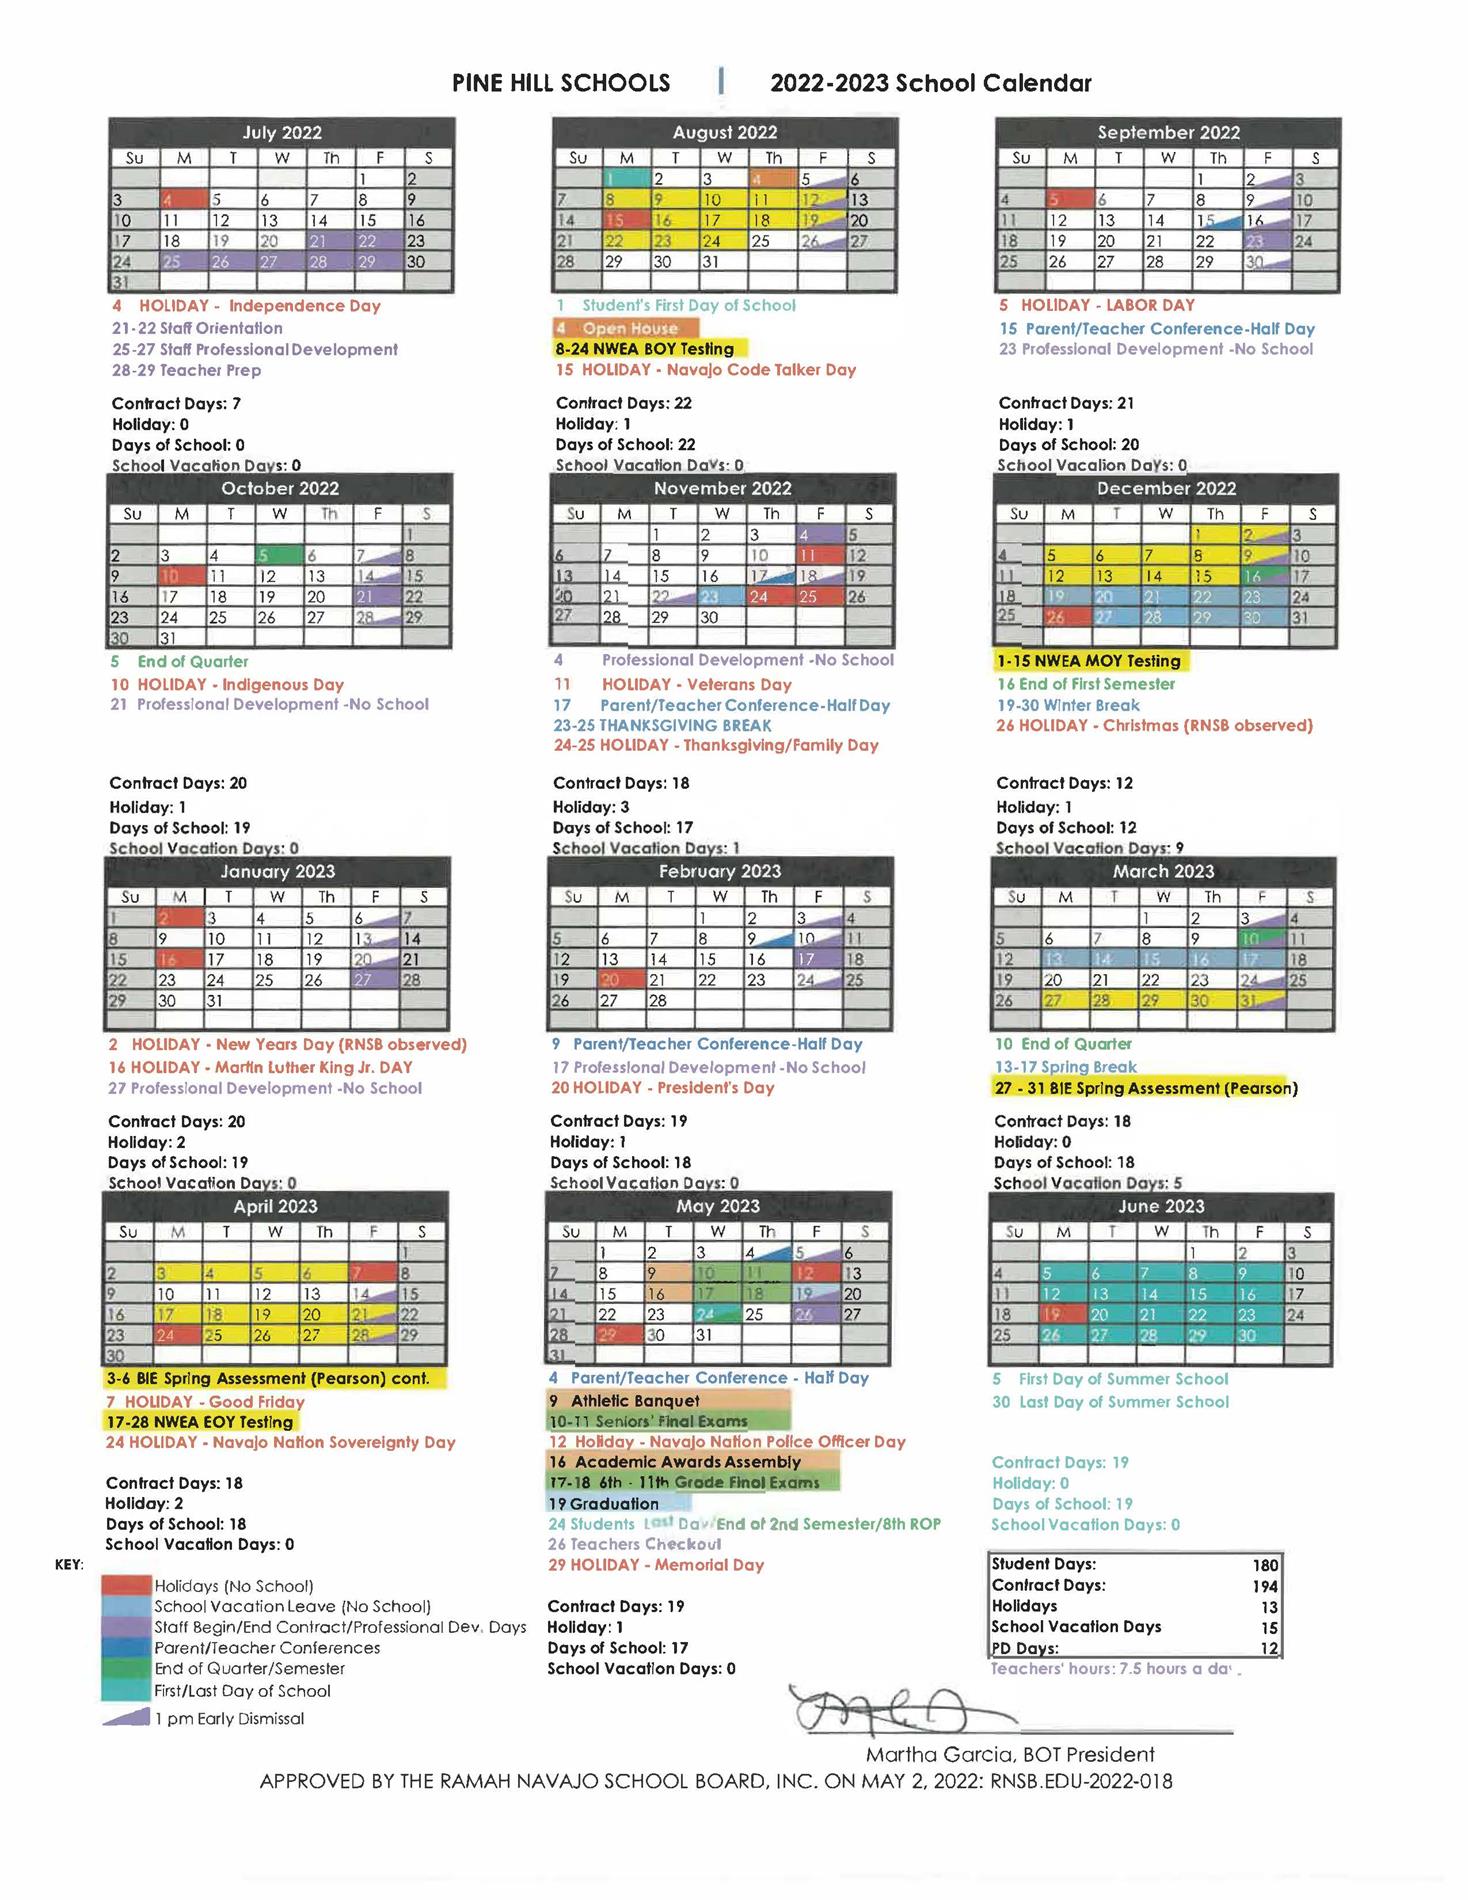 2022-23 school calendar